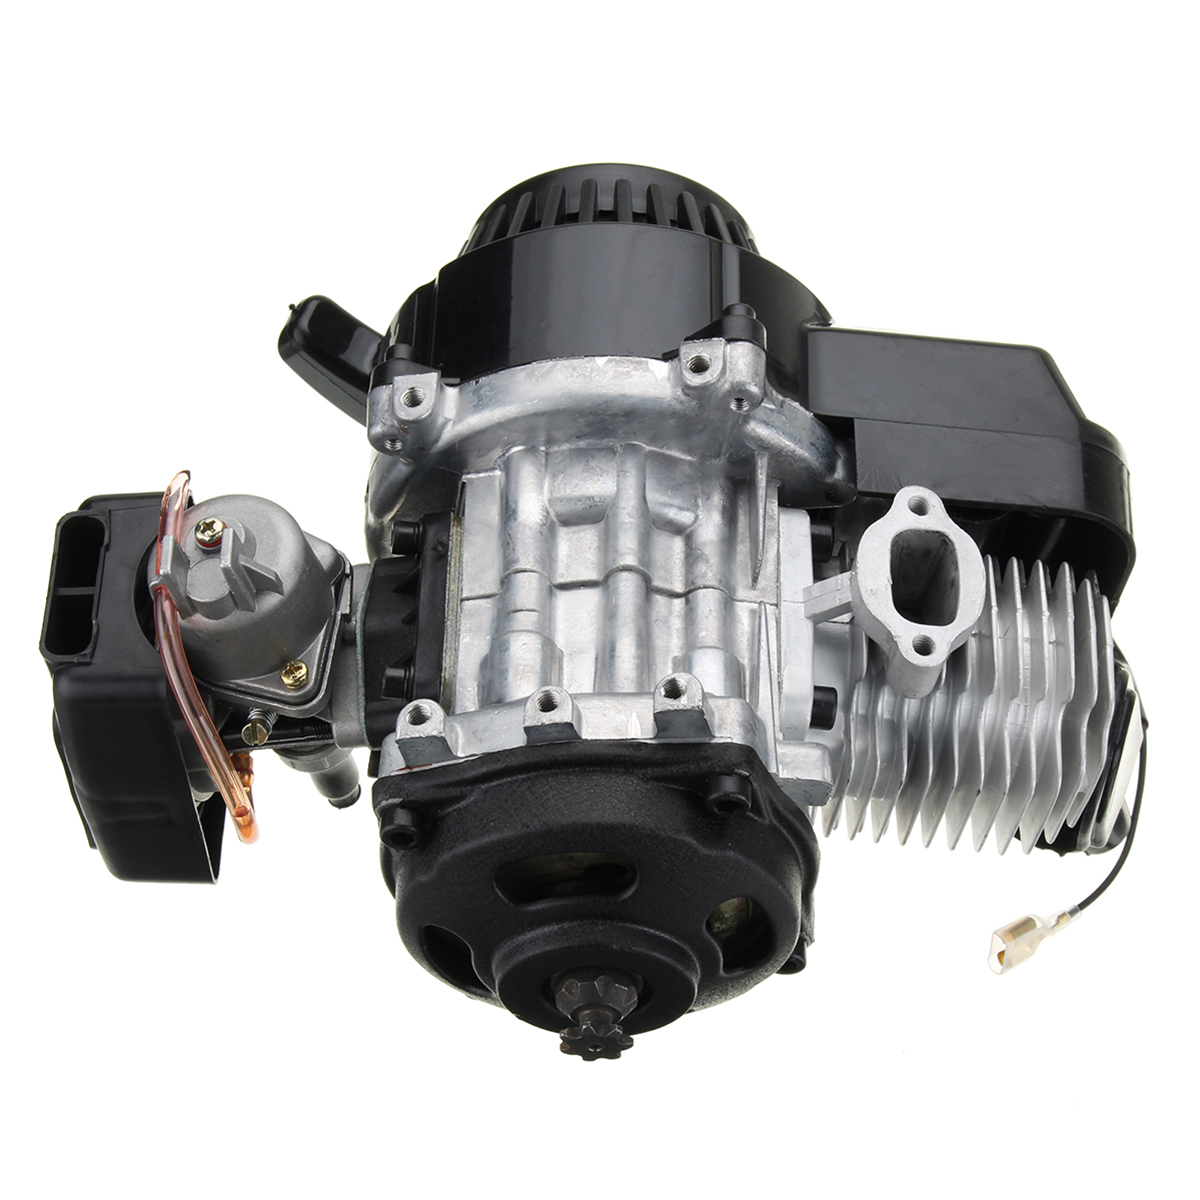 49cc 2-Stroke Pull Start Motor Engine with Transmission For Mini Pocket ...